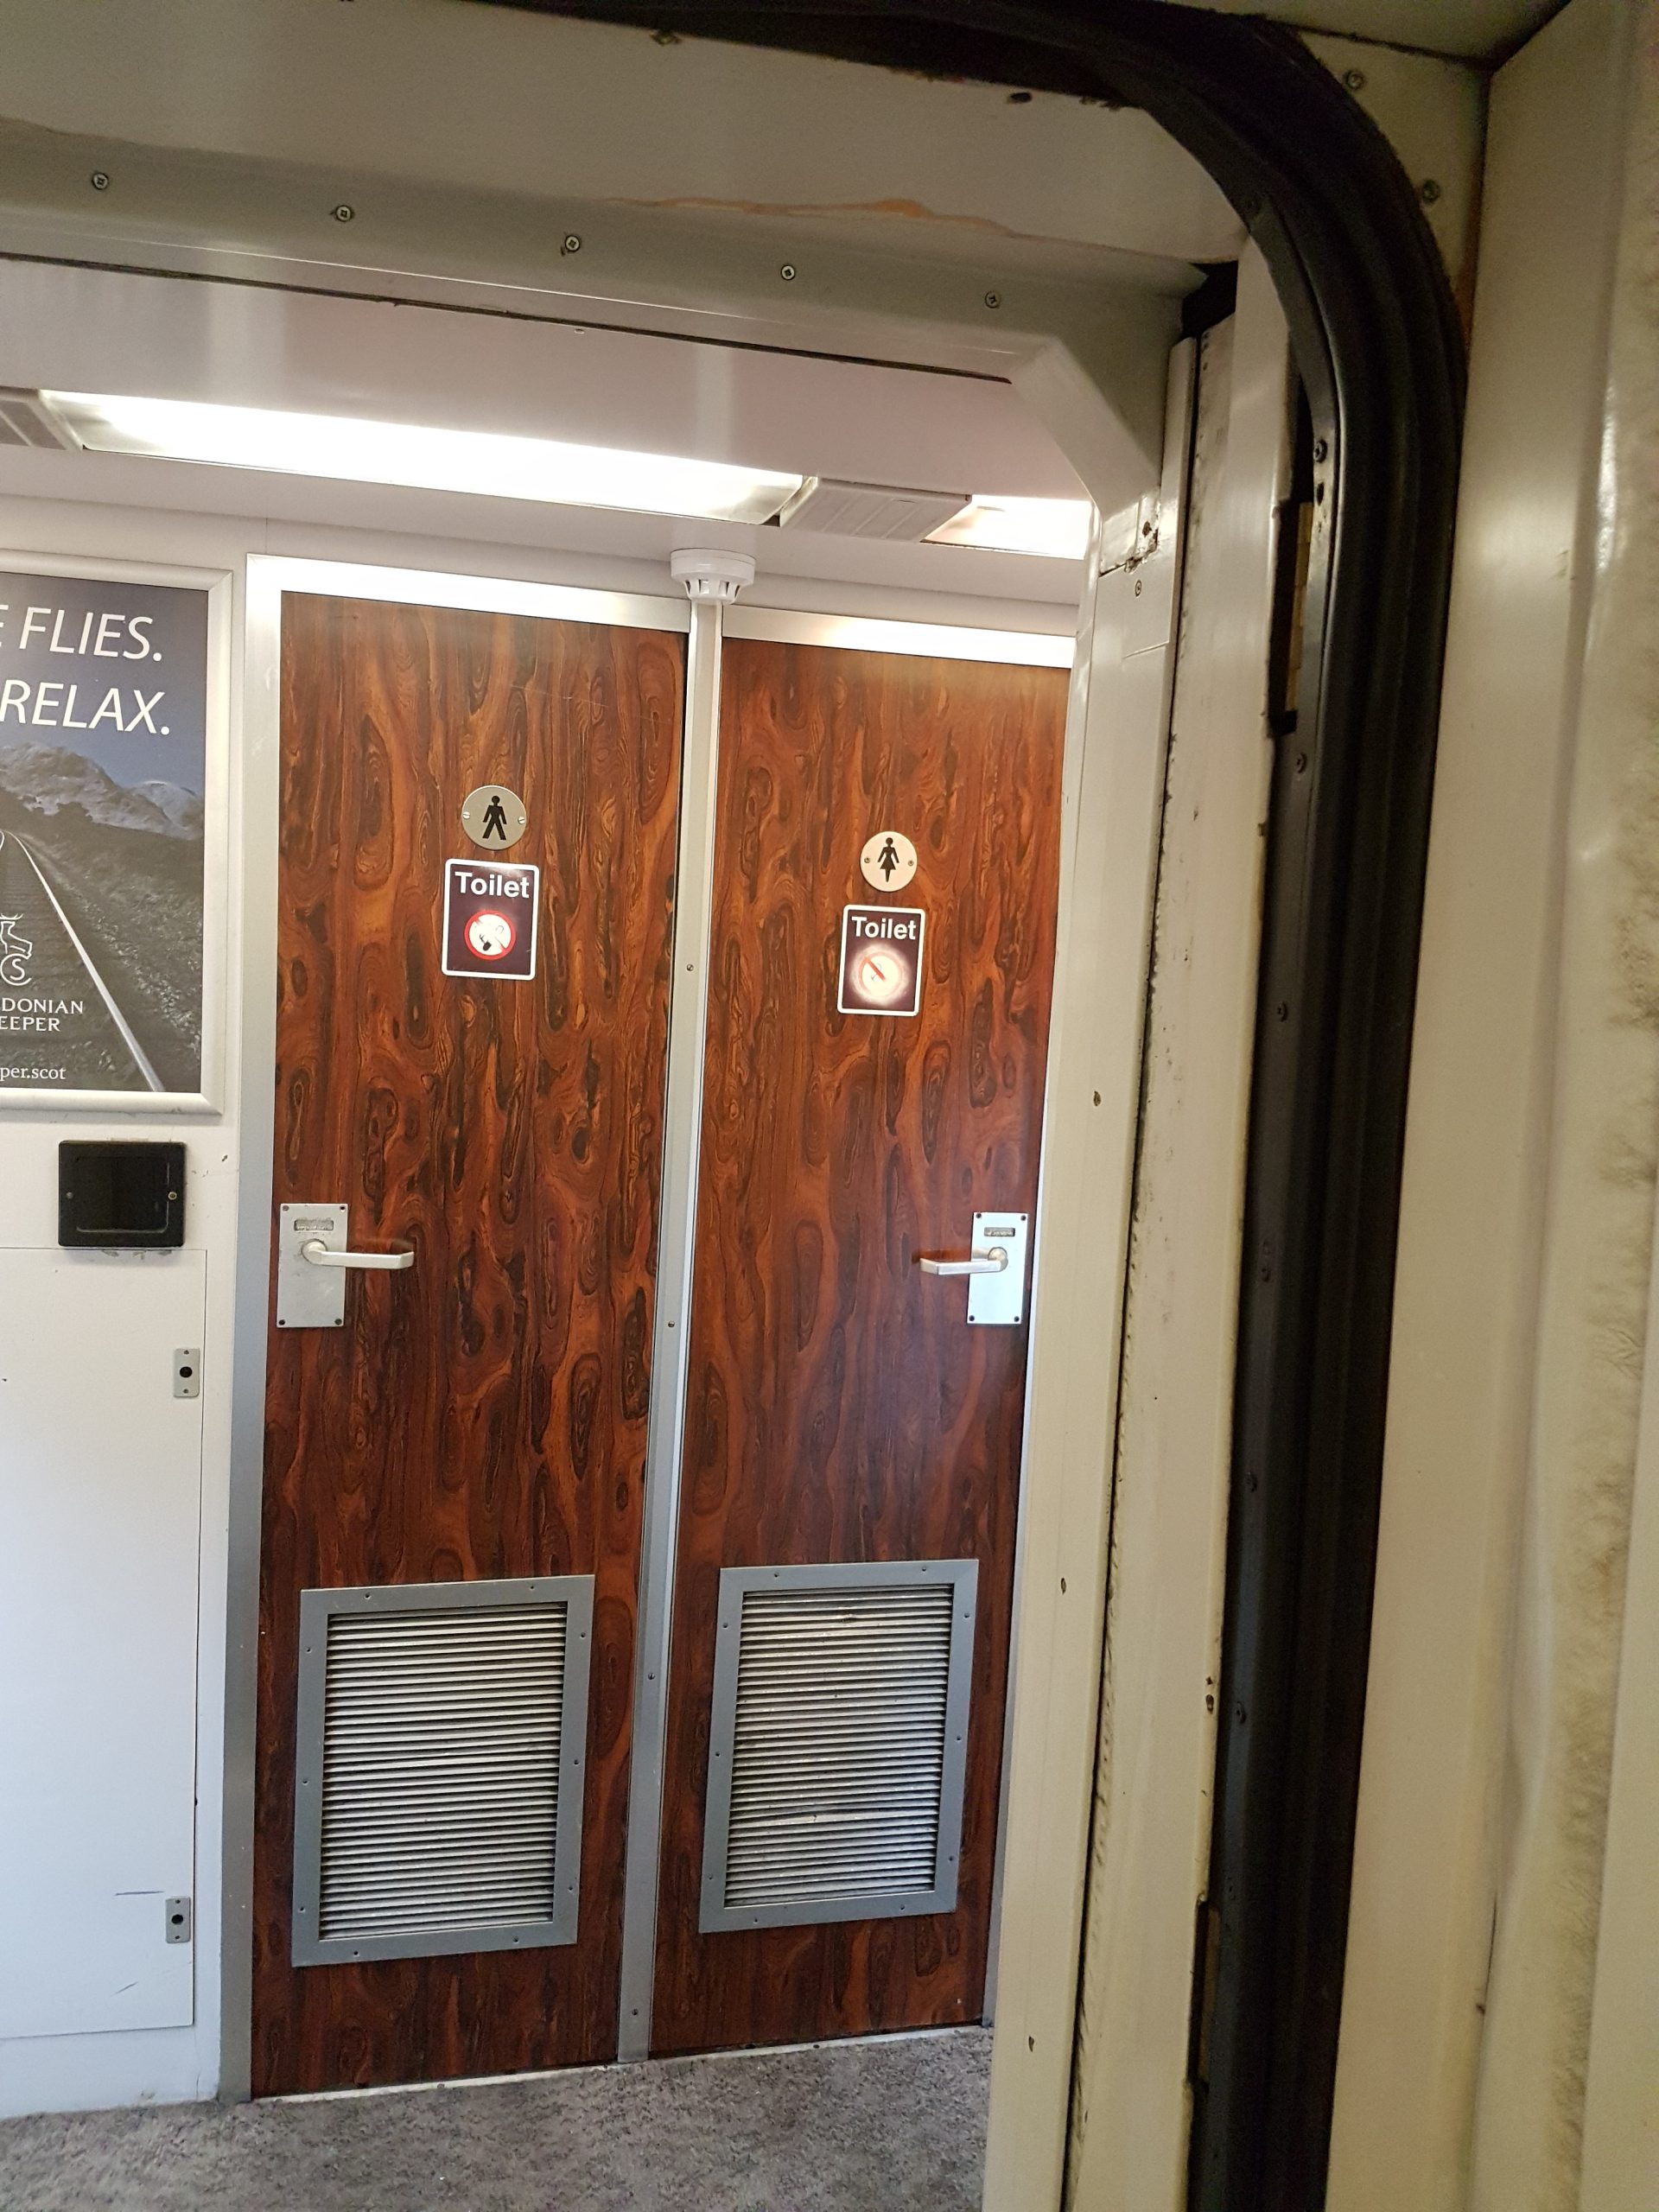 Caledonian Sleeper Train toilets